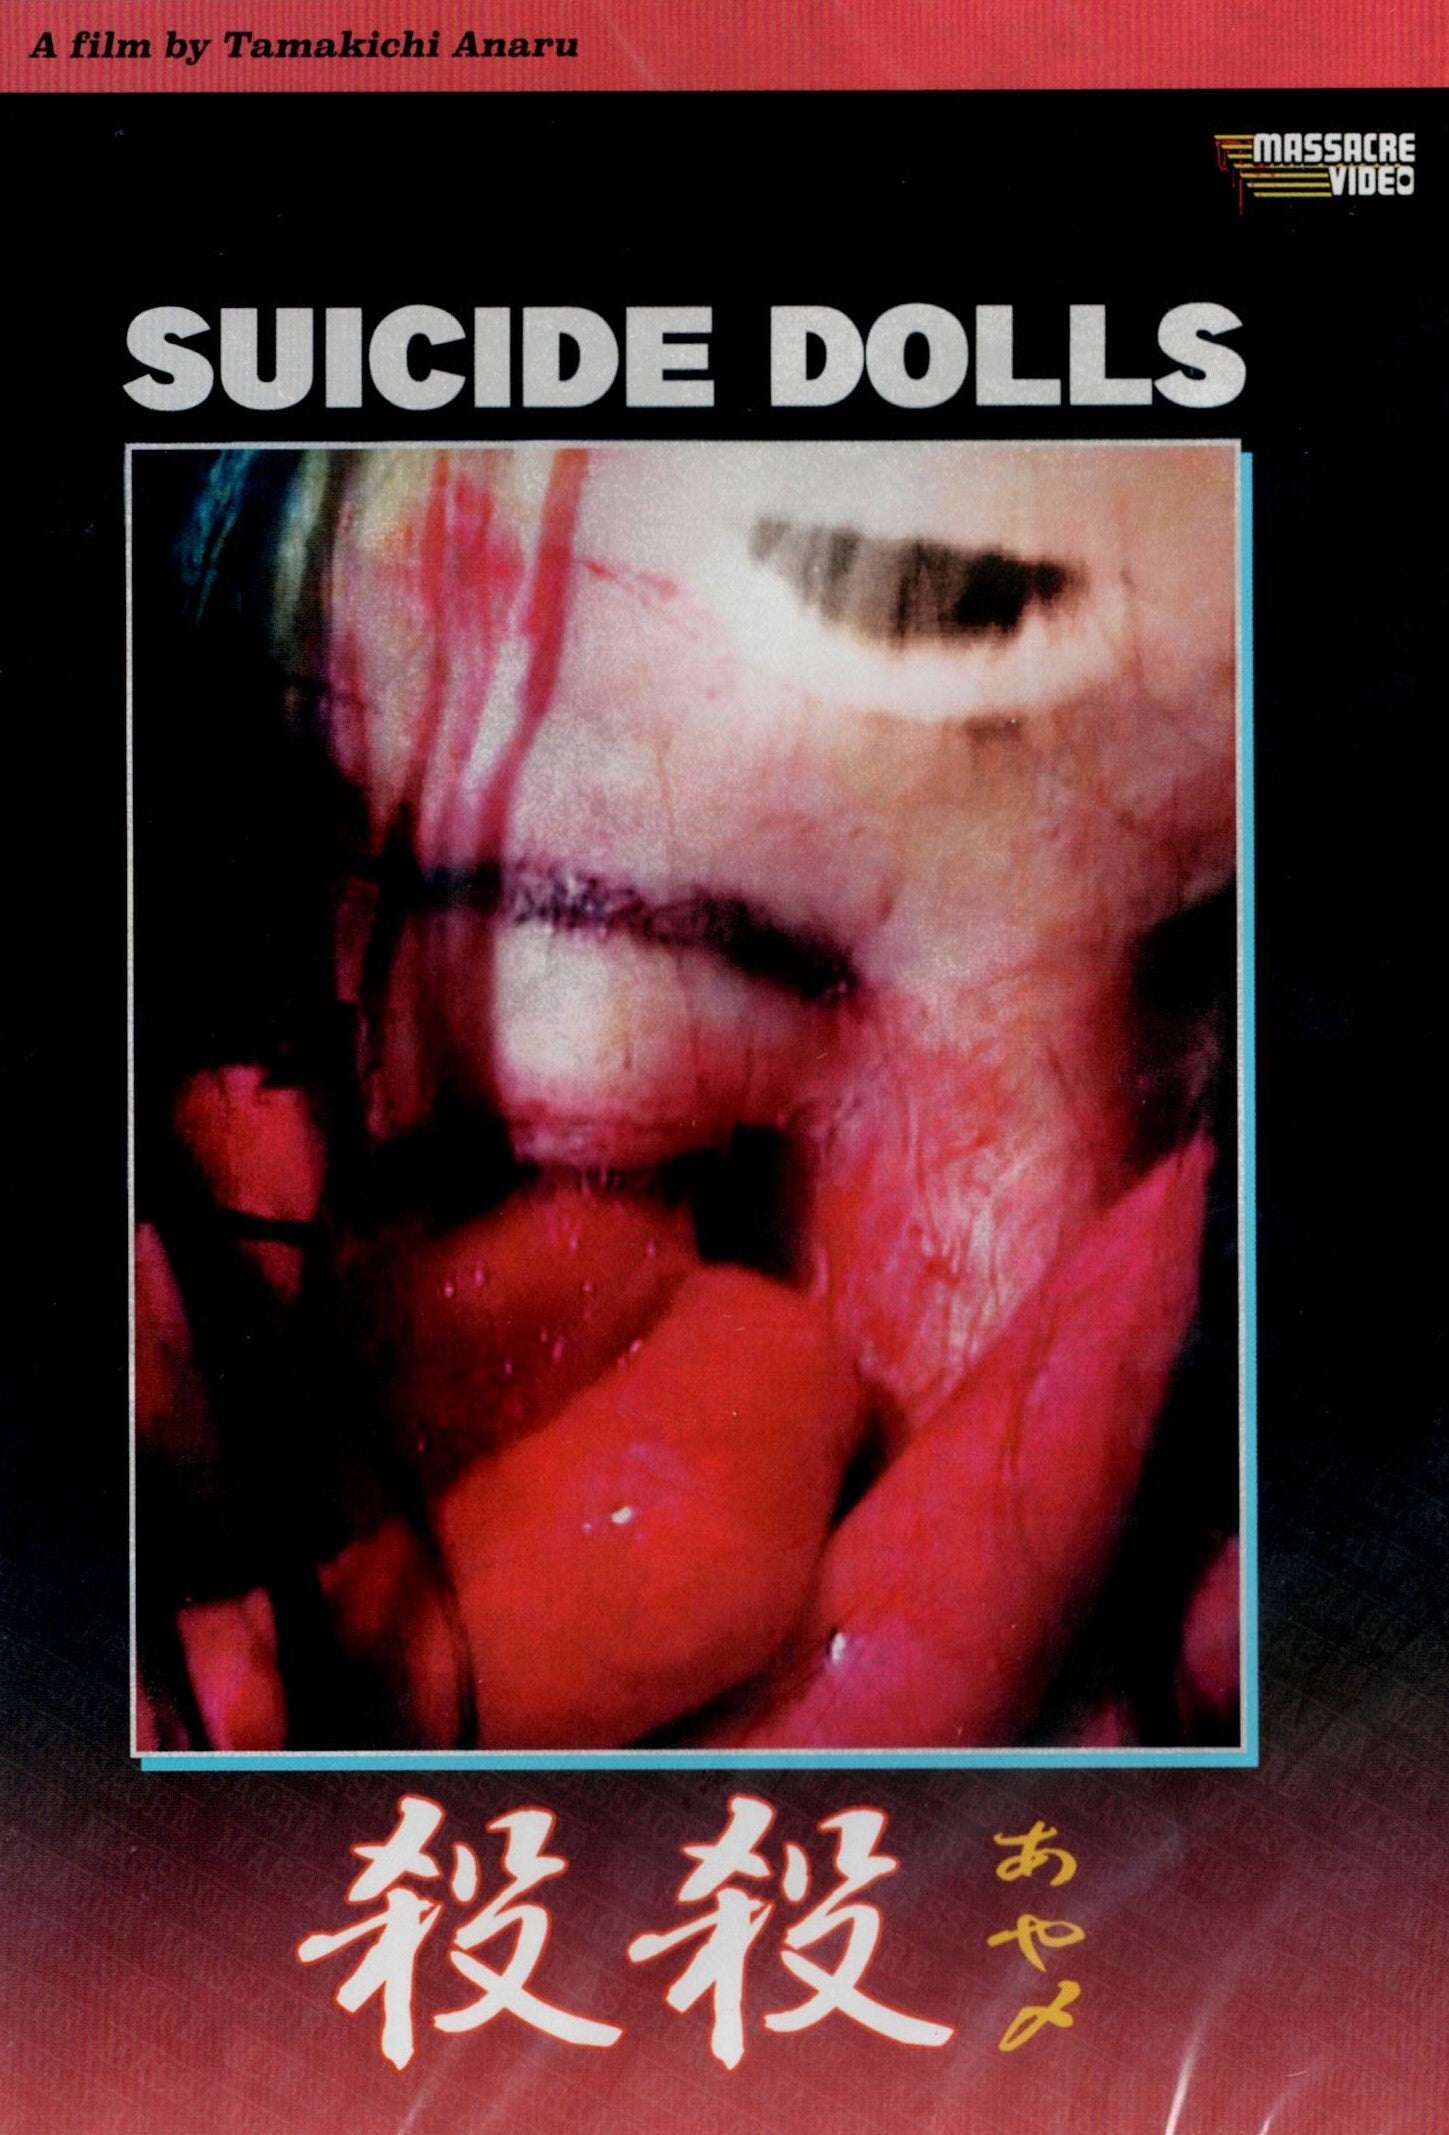 SUICIDE DOLLS DVD